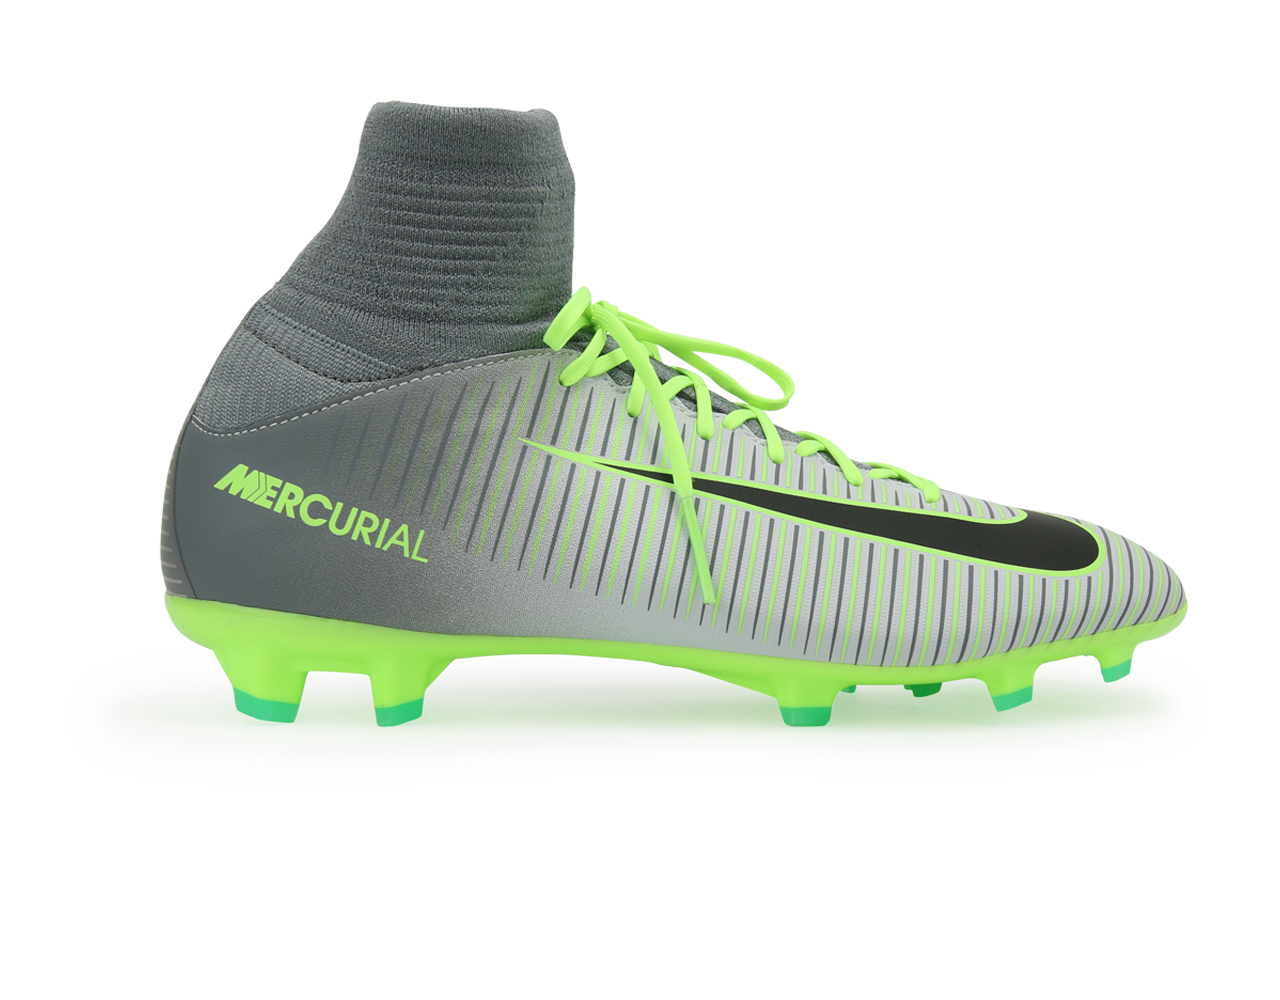 Nike Kids Mercurial Superfly V FG Pure Platinum/Black/Ghost Green